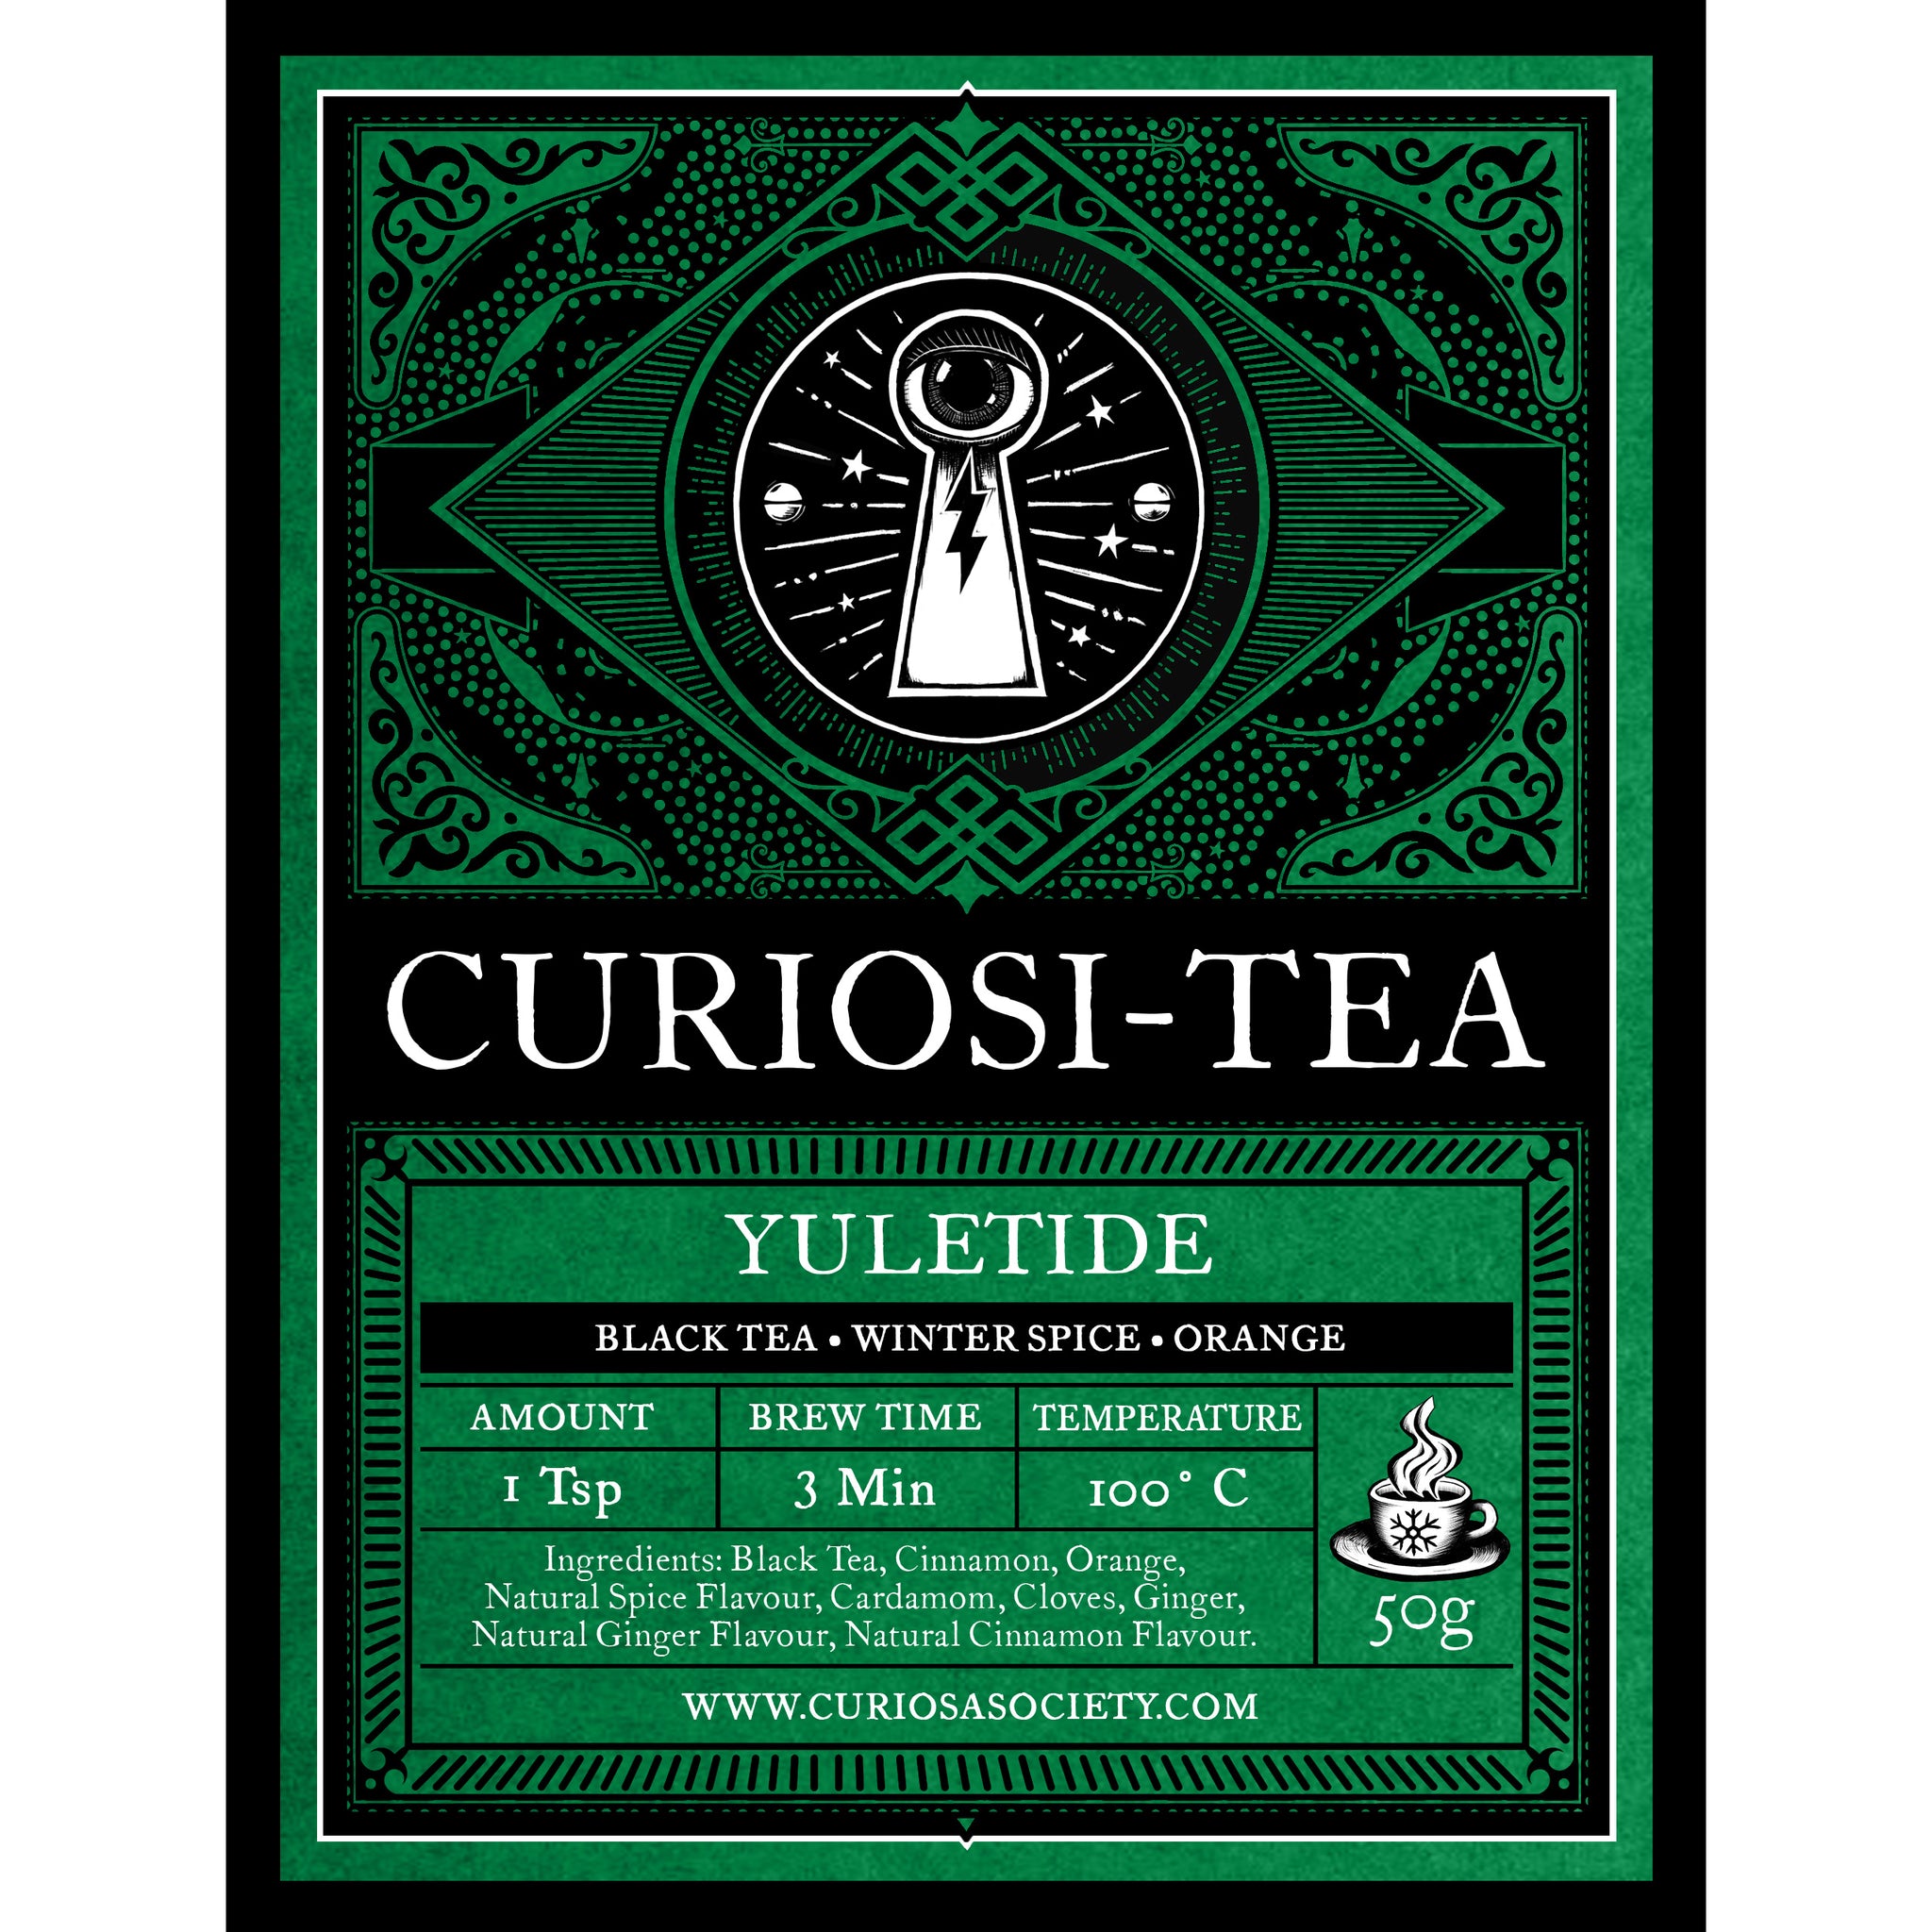 Yuletide Curiosi-tea